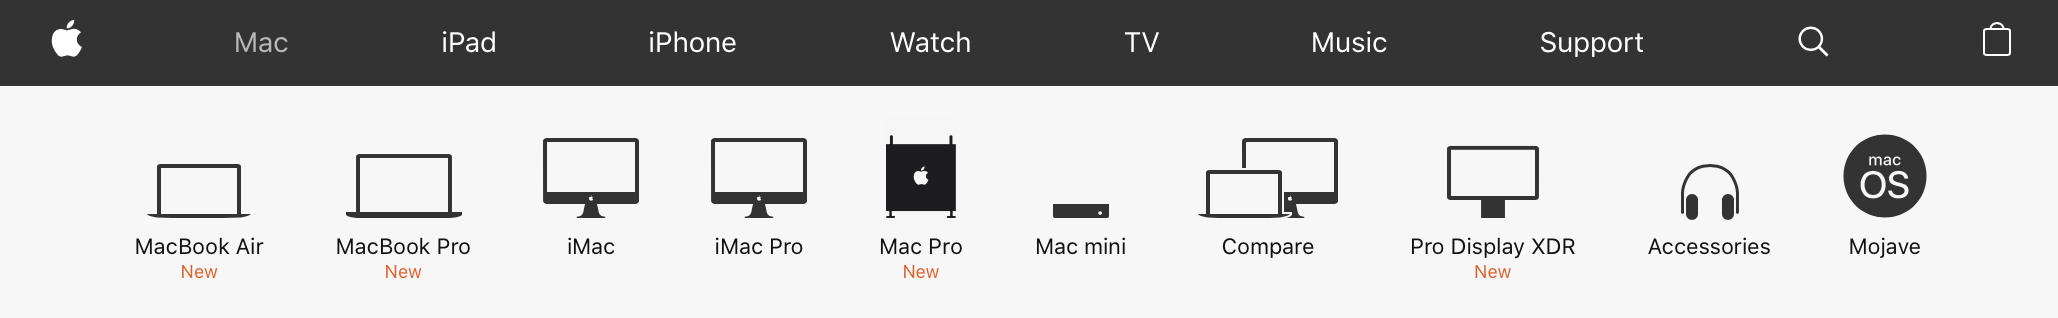 Apple's Mac lineup